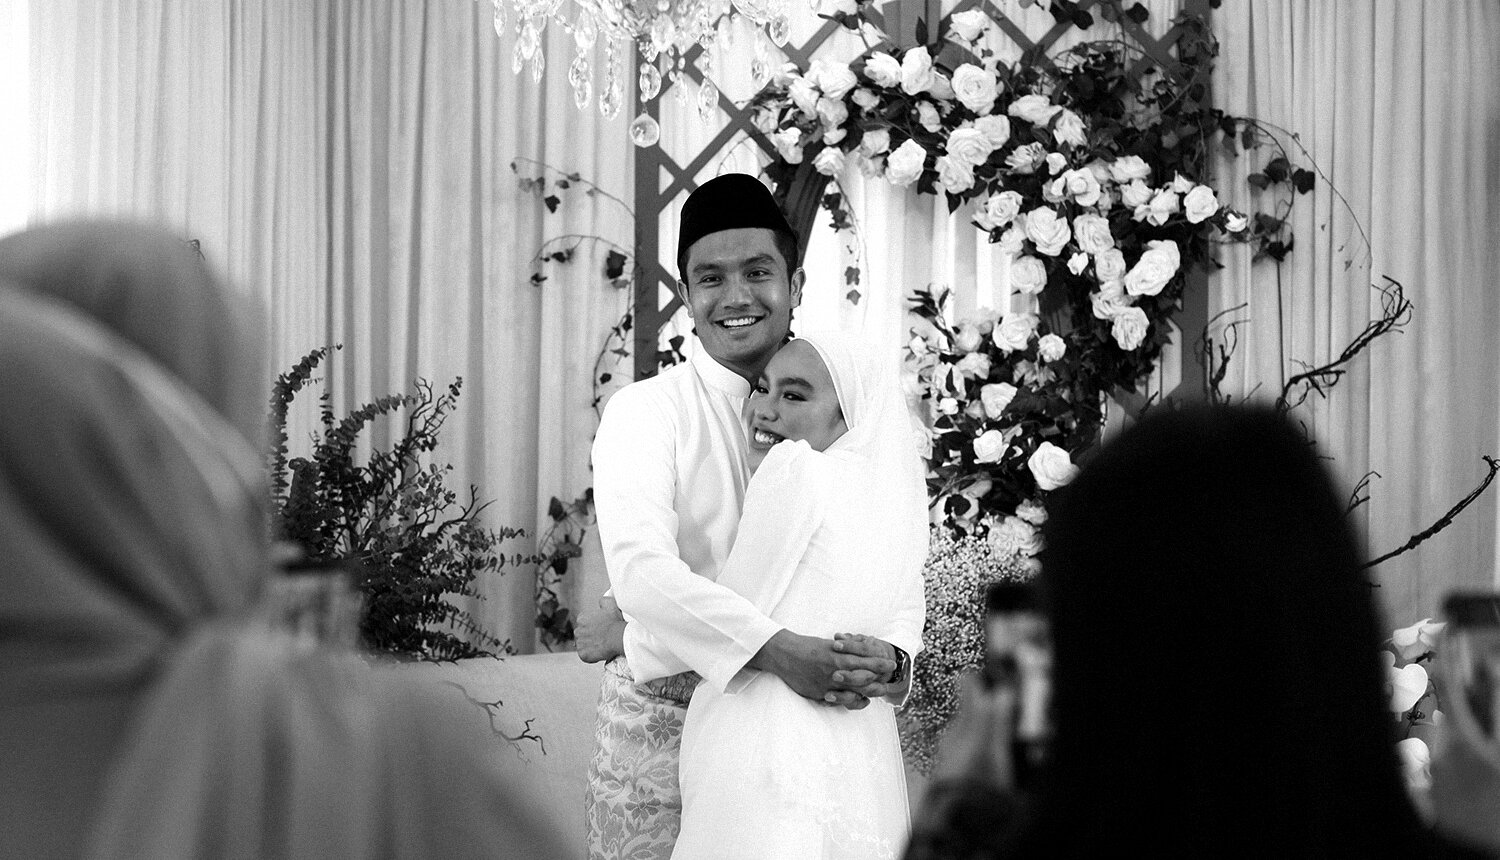 singapore malaysia top wedding photographer kurtahs studio radstorytellers rangefinder magazine photobug community for brides and groom baihaqkira big day akad nikah . 0126.jpg